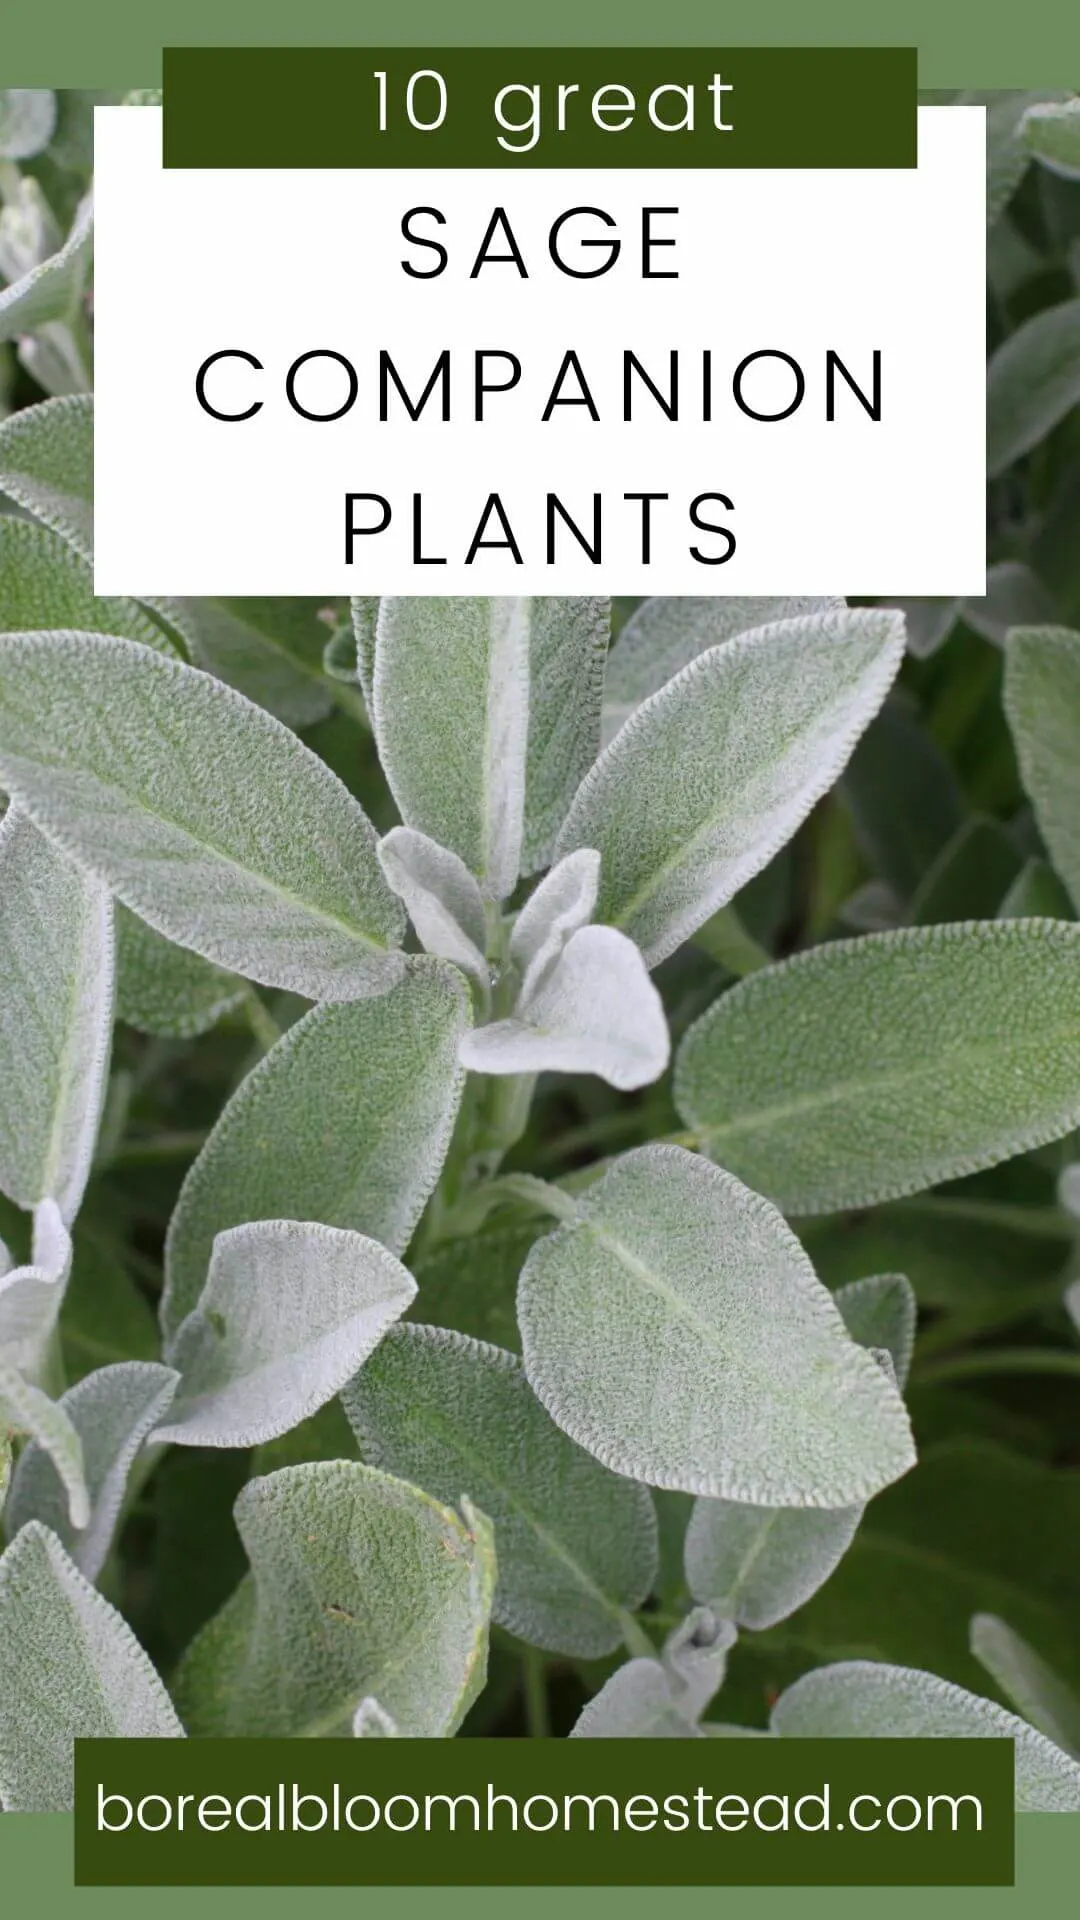 10 great sage companion plants pinterest graphic.